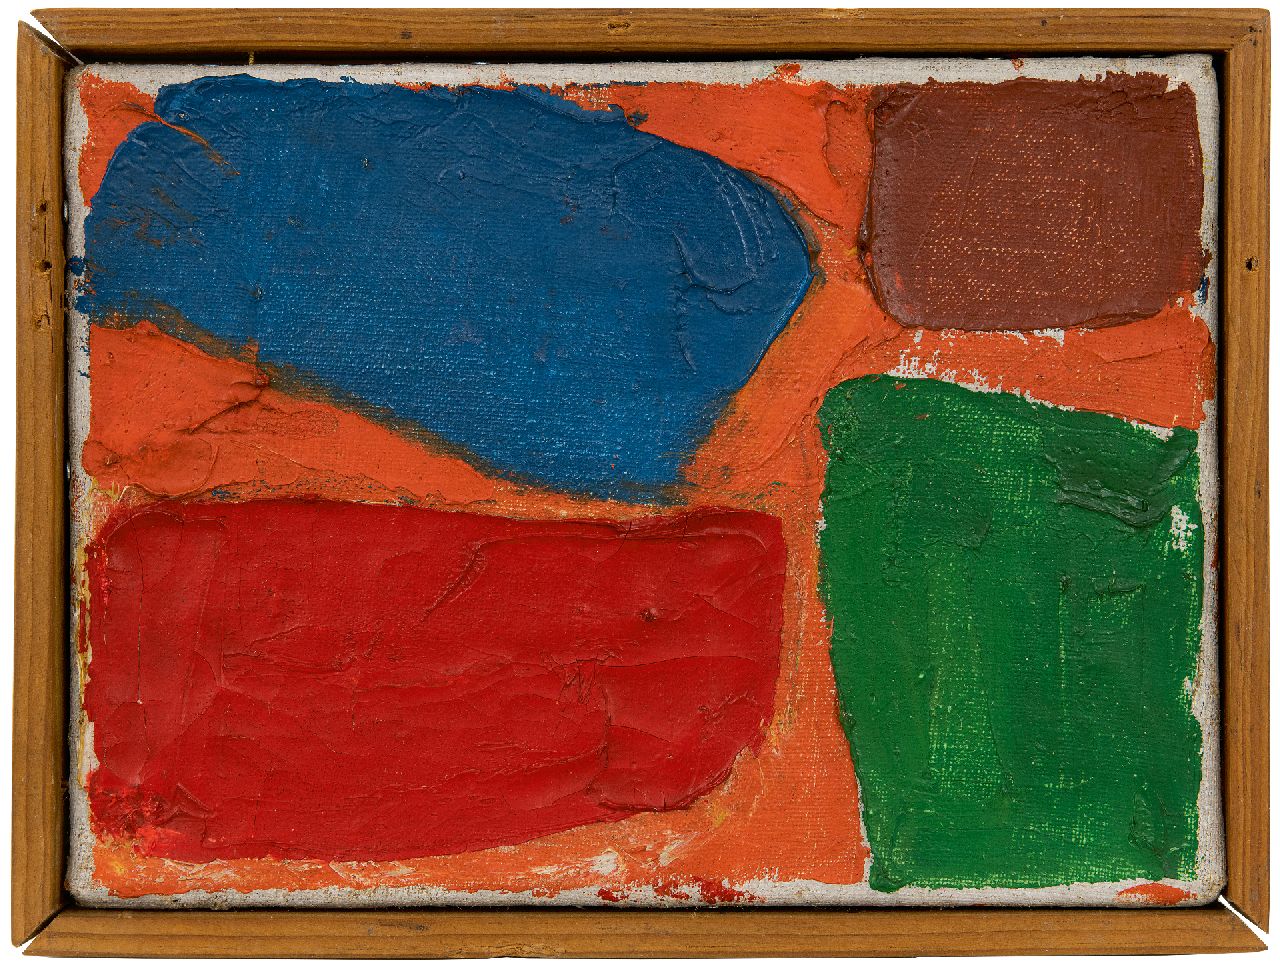 Gilbert S.  | Stephen Gilbert | Gemälde zum Verkauf angeboten | Komposition, Öl auf Leinwand 16,3 x 22,5 cm, te dateren ca. 1951